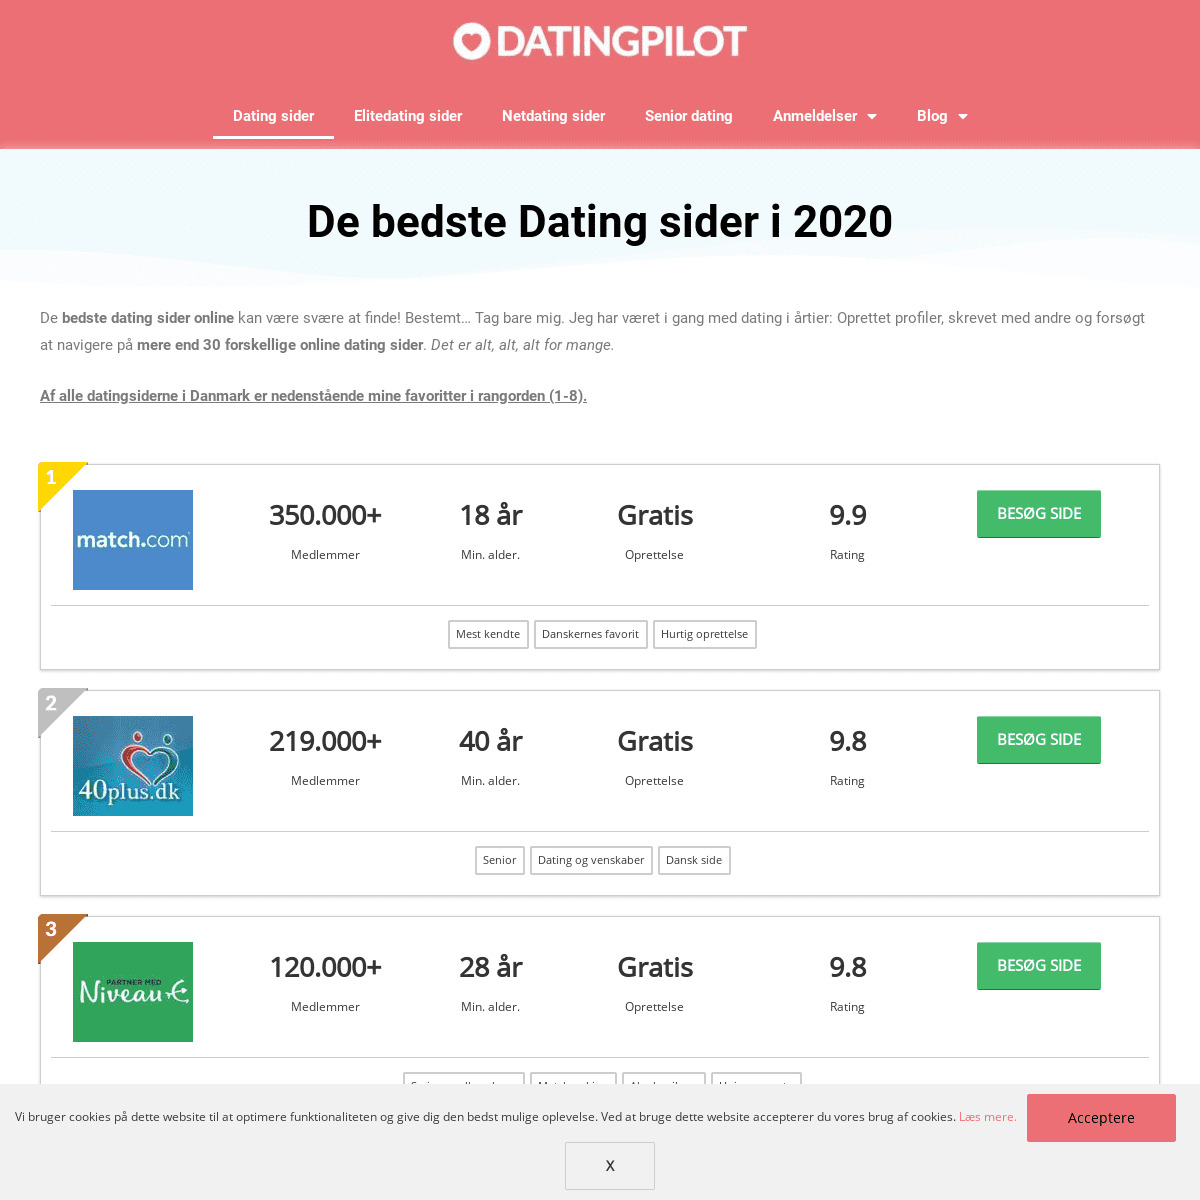 A complete backup of datingpilot.dk